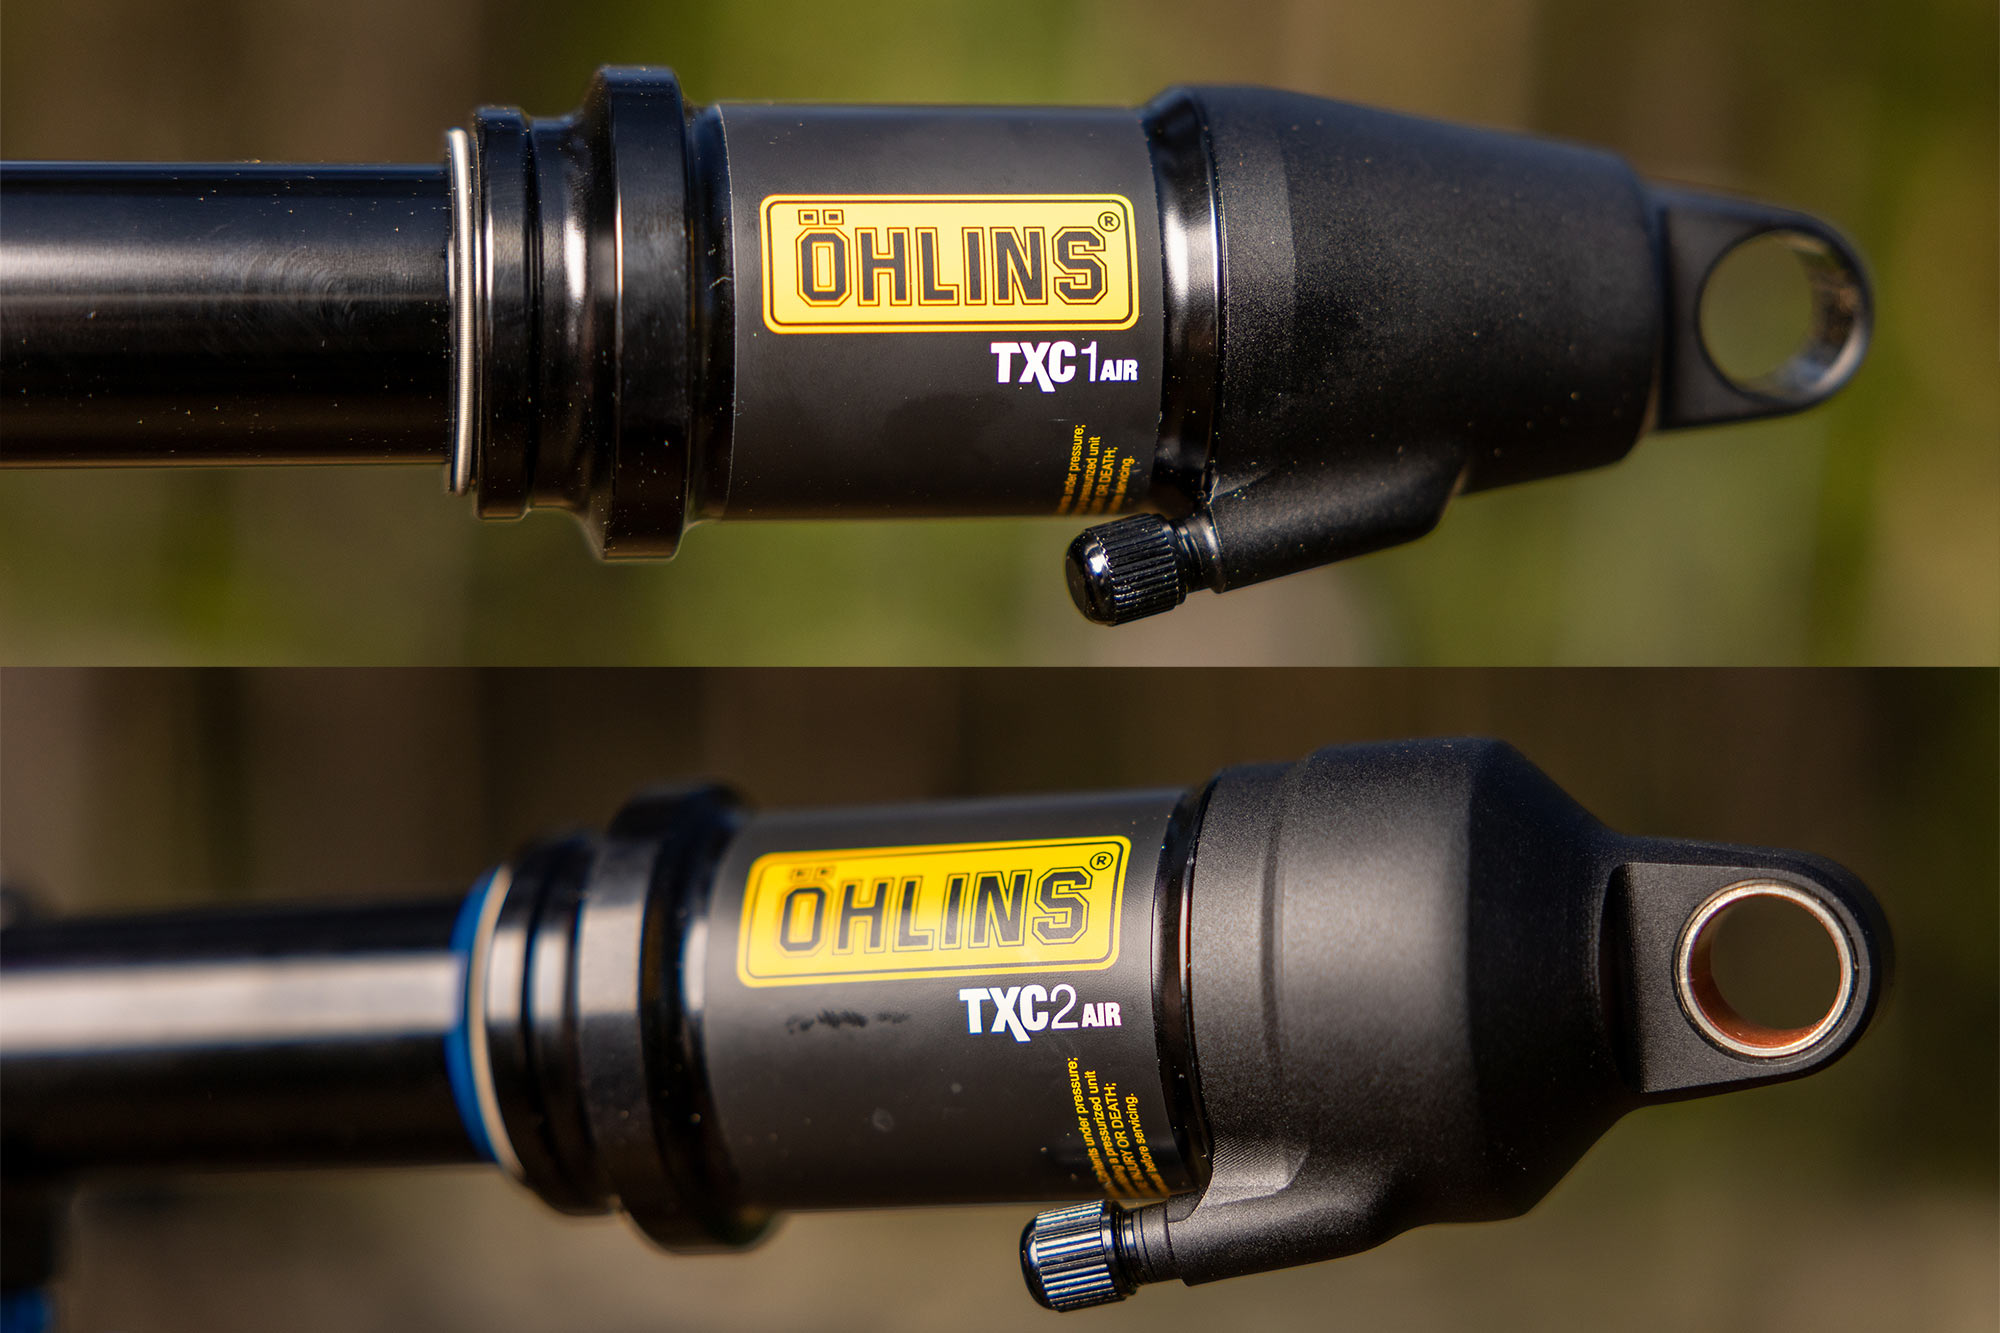 Öhlins XC short-travel 100-120mm cross-country mountain bike racing suspension, photo by Jeff Thoren, rear shock volume options